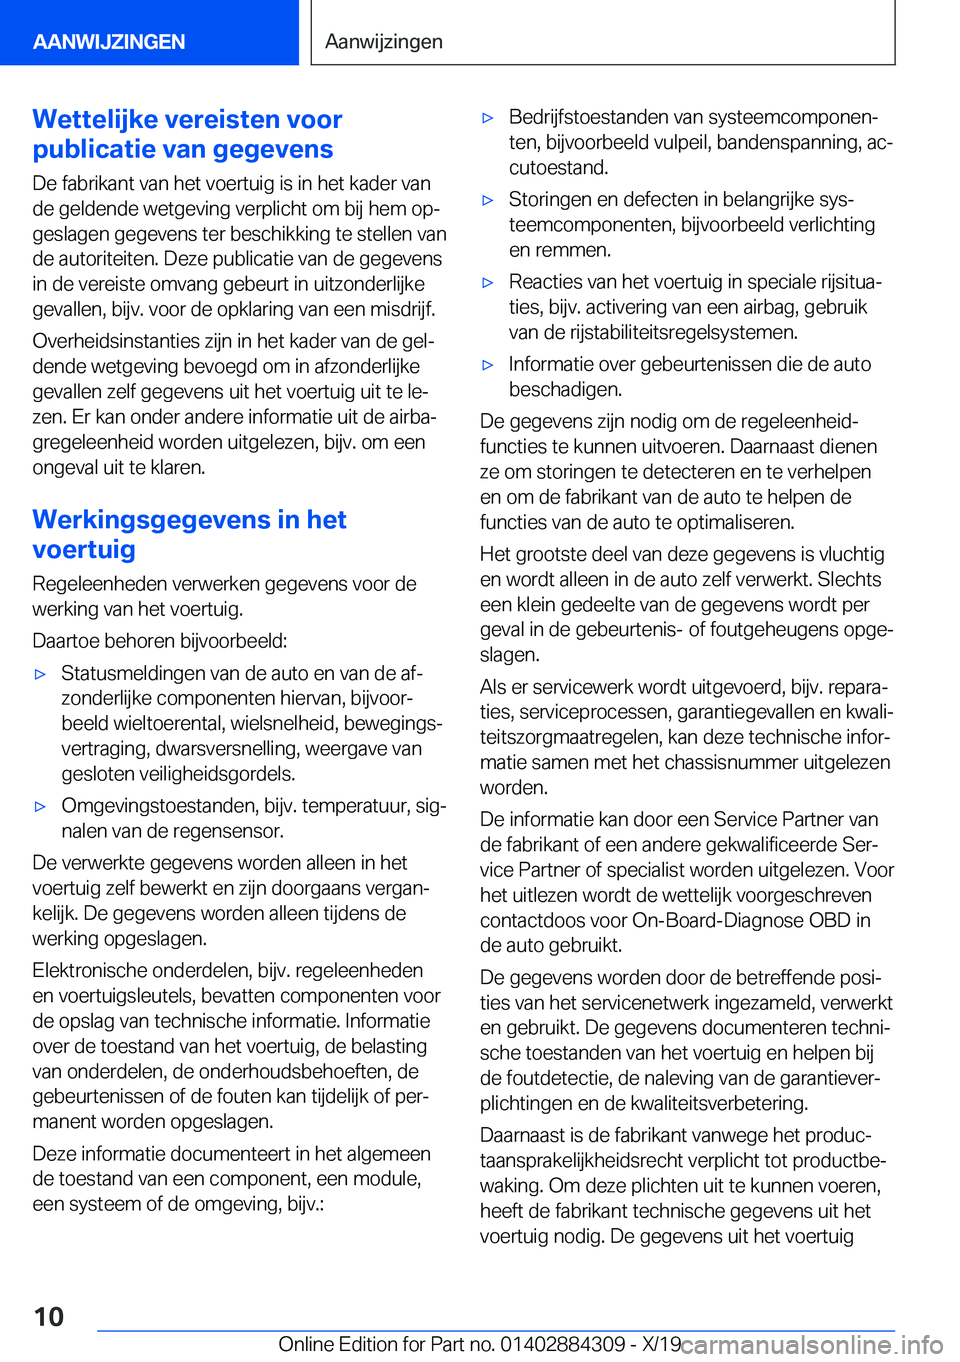 BMW 8 SERIES GRAN COUPE 2020  Instructieboekjes (in Dutch) �W�e�t�t�e�l�i�j�k�e��v�e�r�e�i�s�t�e�n��v�o�o�r
�p�u�b�l�i�c�a�t�i�e��v�a�n��g�e�g�e�v�e�n�s
�D�e��f�a�b�r�i�k�a�n�t��v�a�n��h�e�t��v�o�e�r�t�u�i�g��i�s��i�n��h�e�t��k�a�d�e�r��v�a�n
�d�